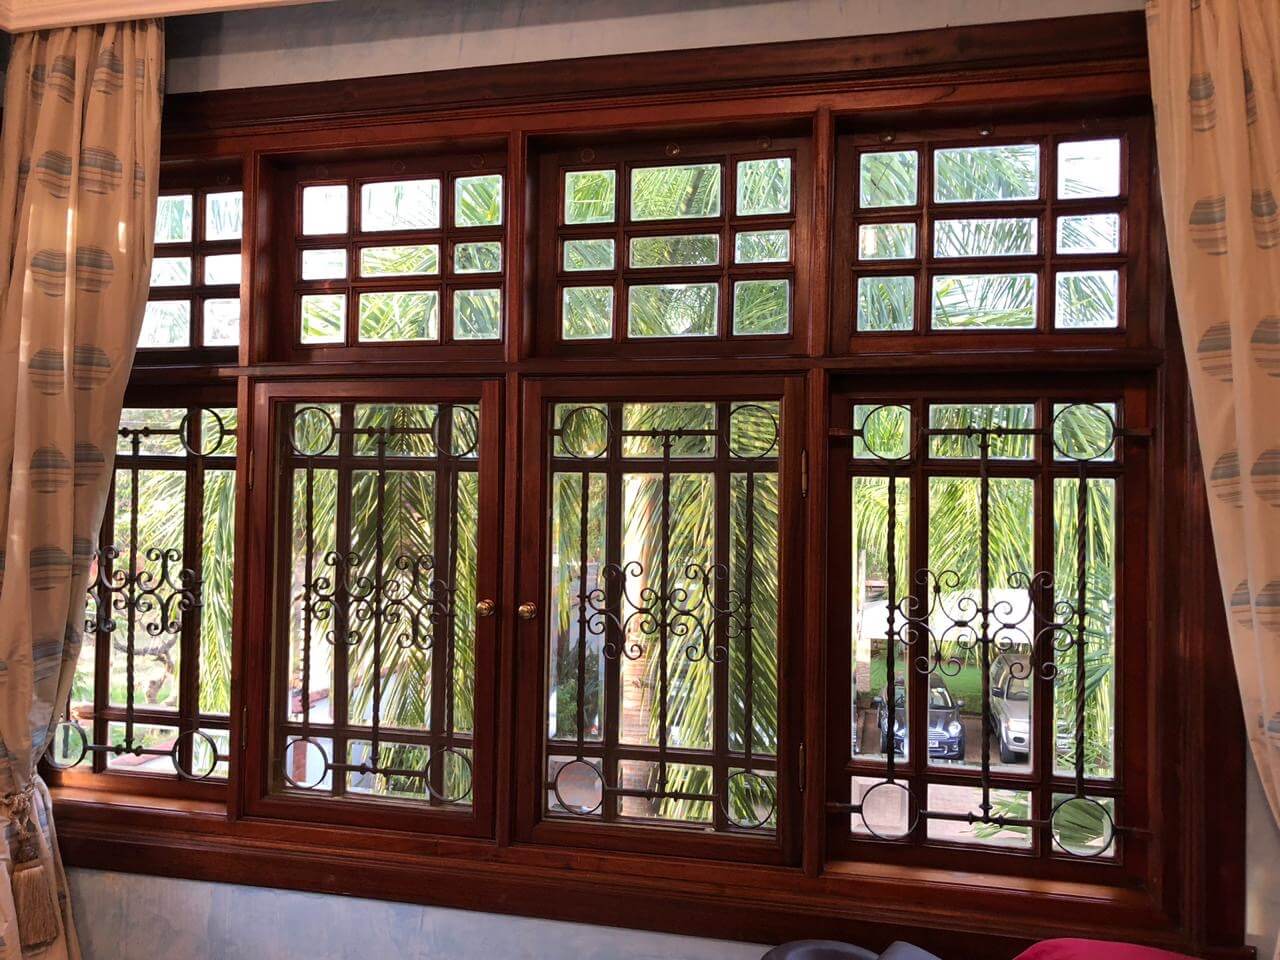 A luxurious wooden window